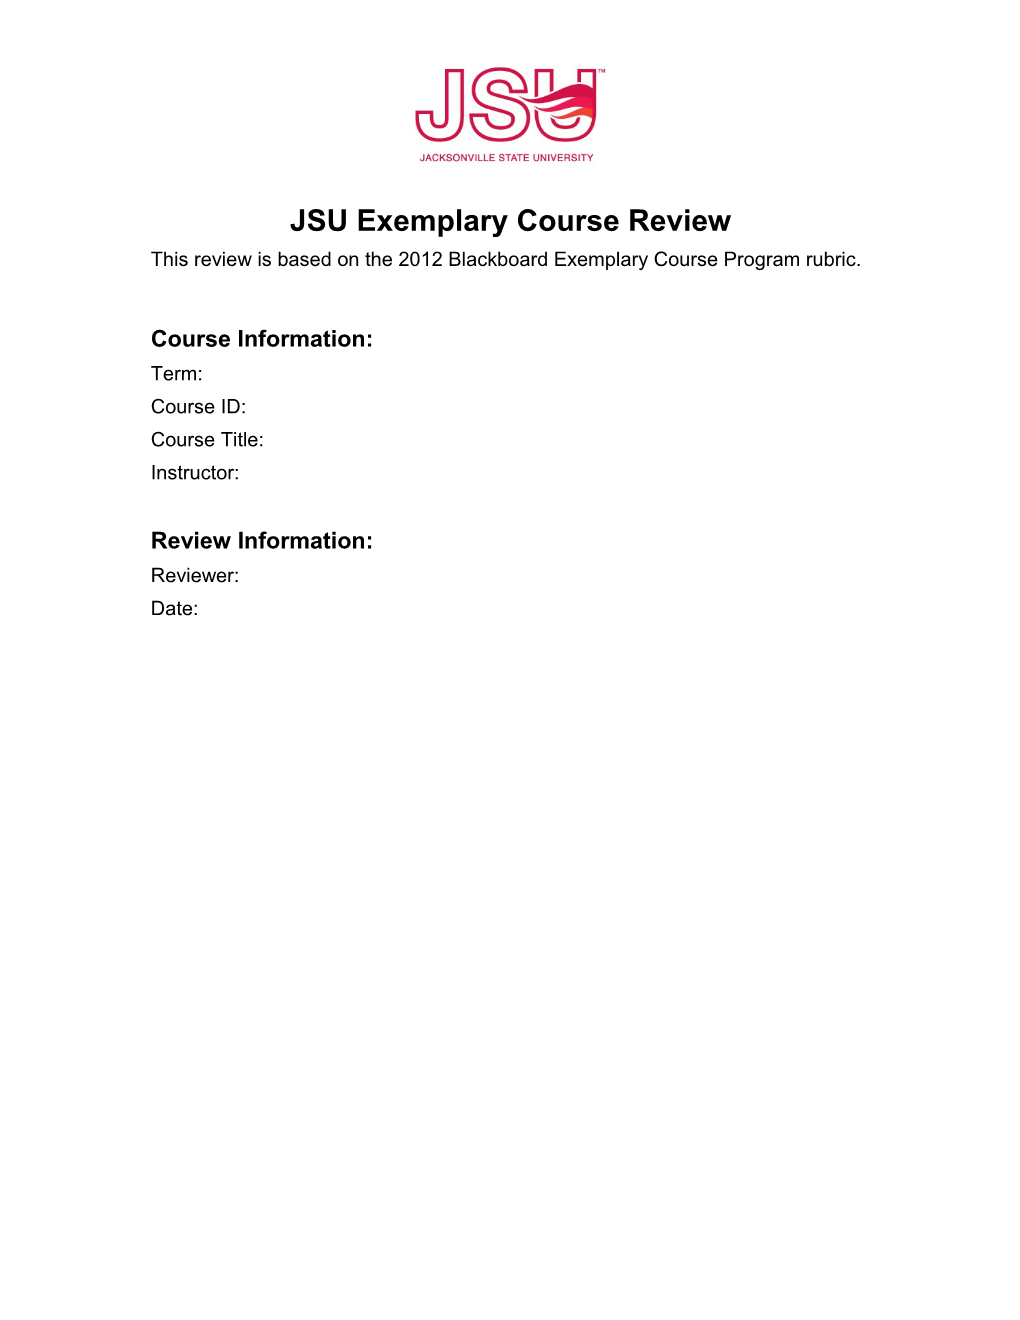 Blackboard Exemplary Course Program s1